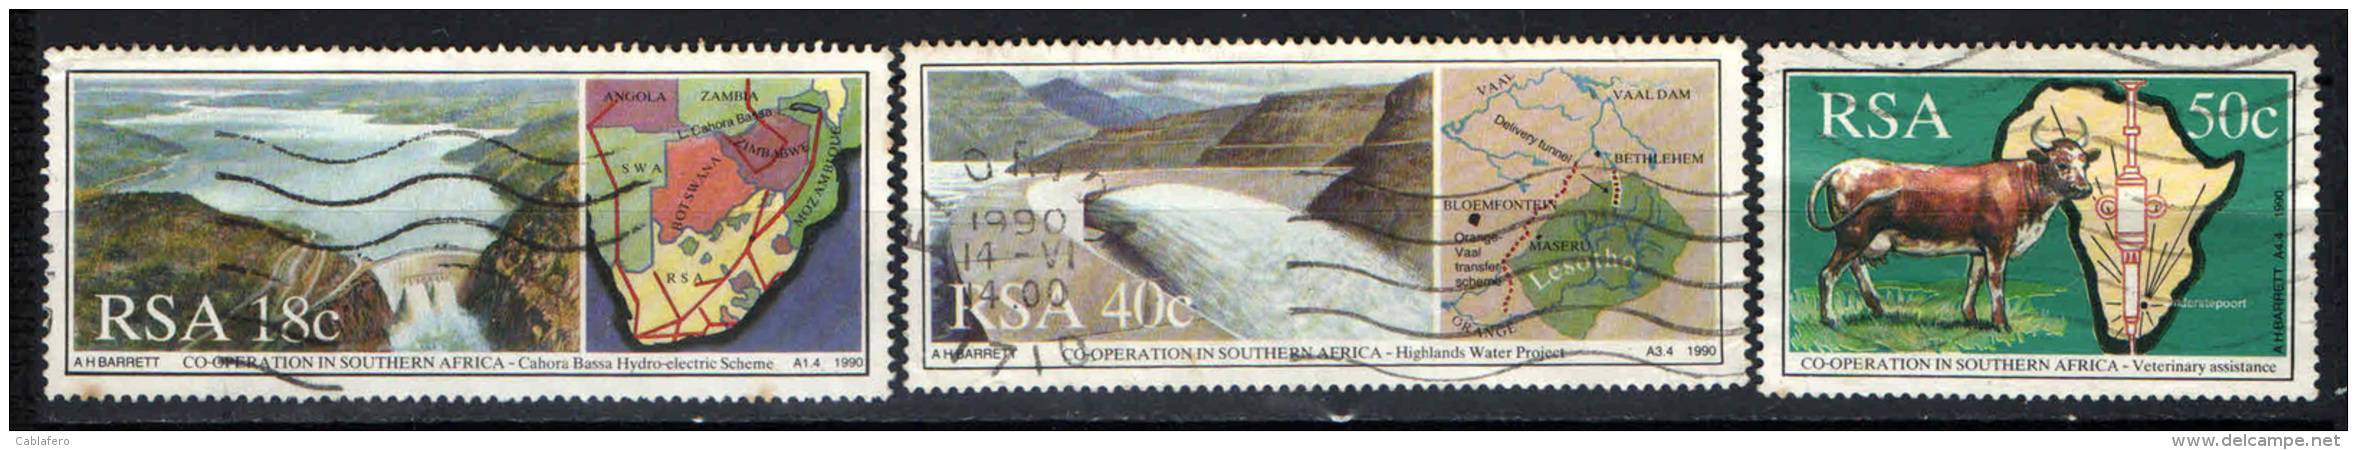 SUD AFRICA - 1990 - MAPPE DEL SUDAFRICA - USATI - Used Stamps